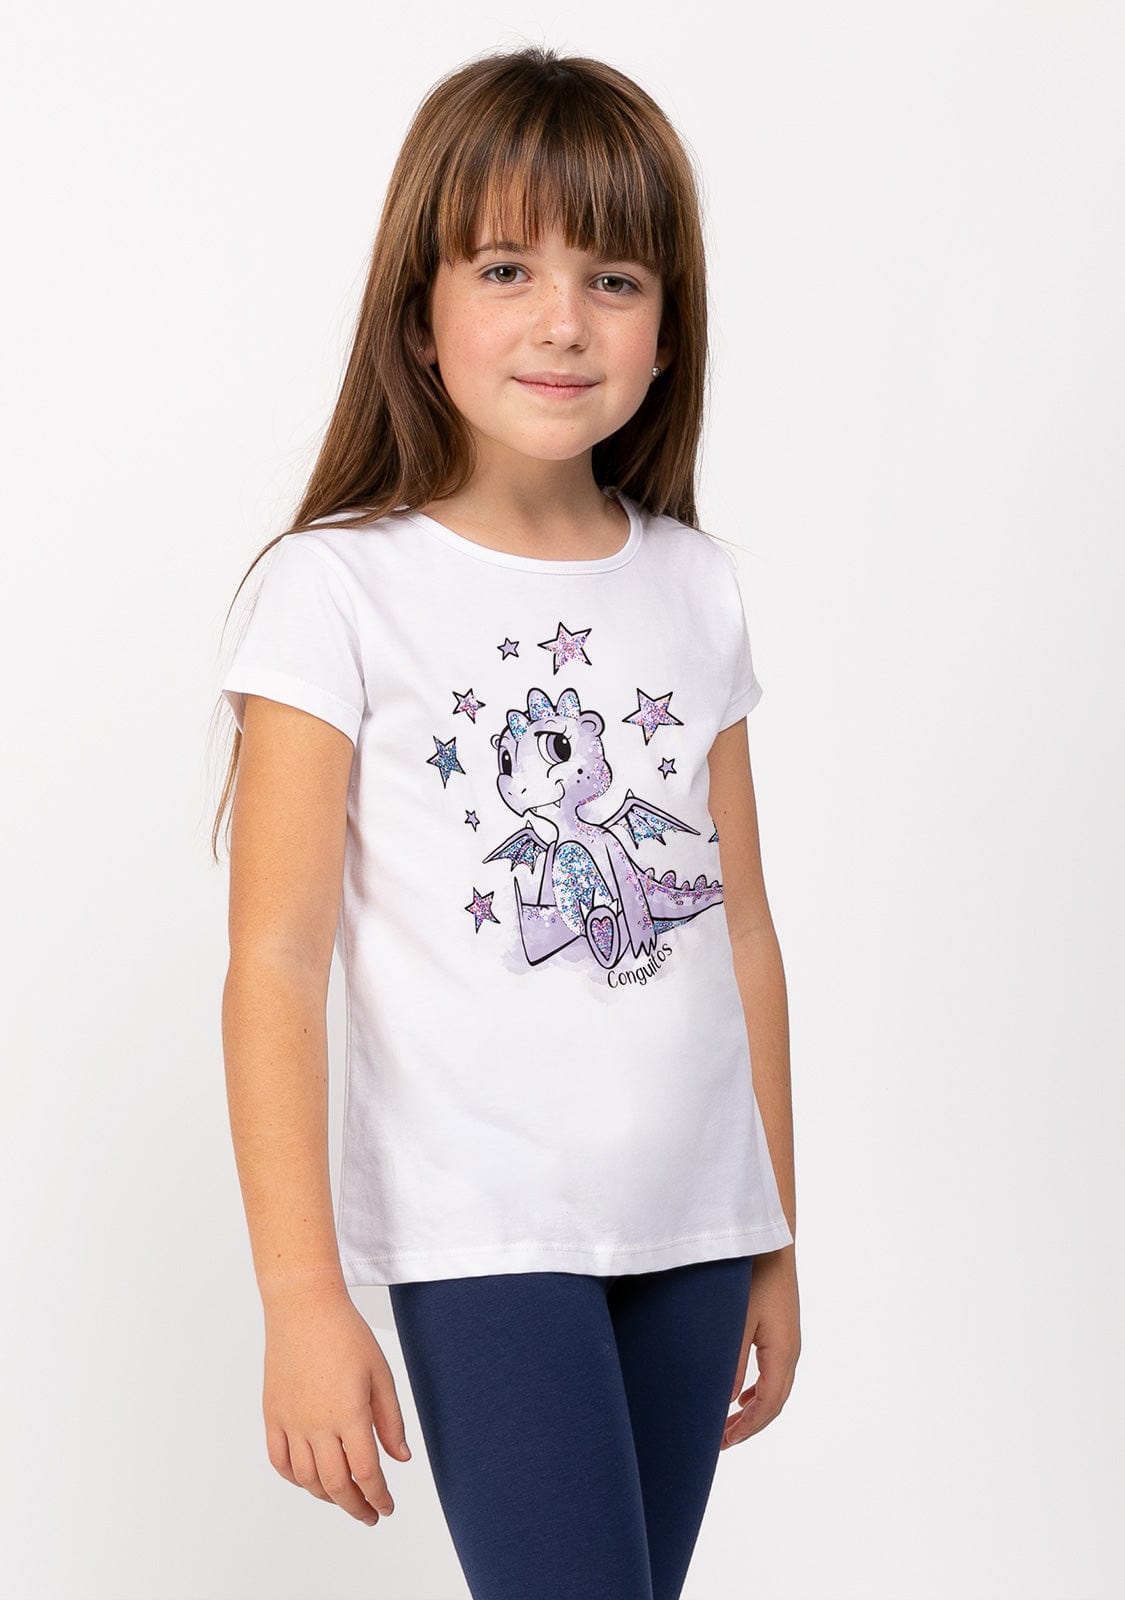 CONGUITOS TEXTIL Clothing Girl's Dragon Sequins T-shirt